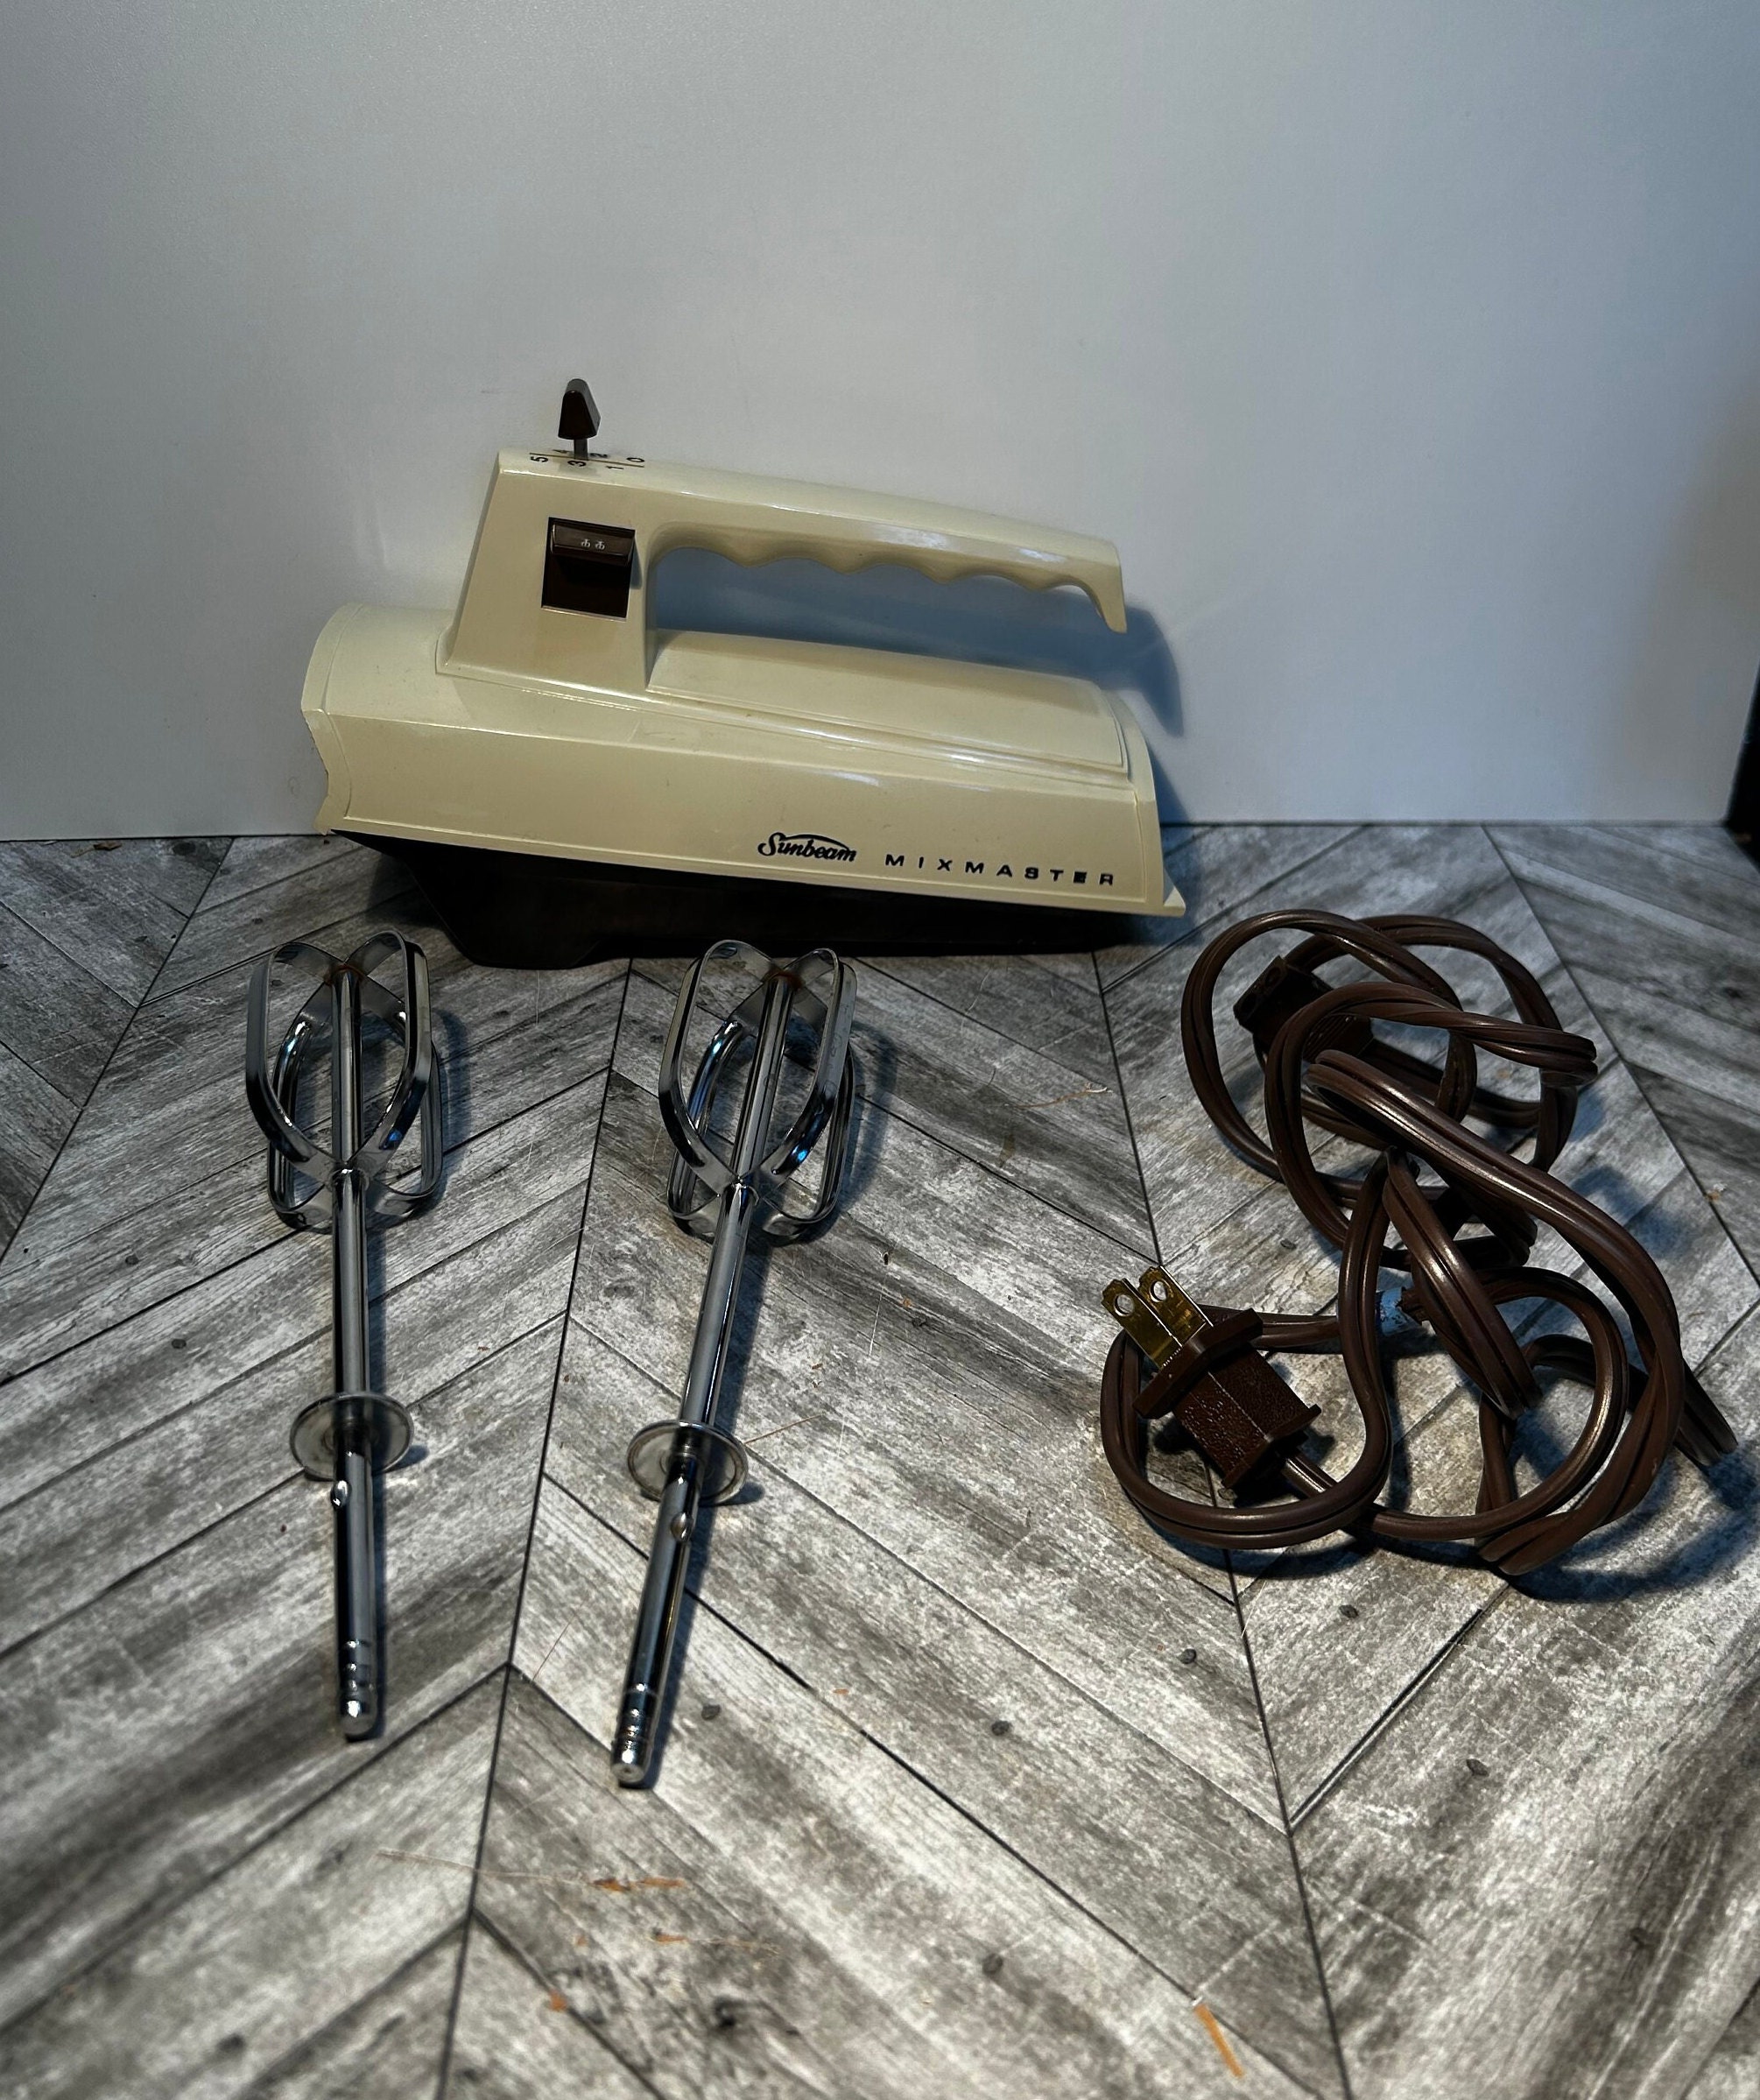 Sunbeam Mixmaster Love — 1957- 1960's Sunbeam Mixmaster attachemnt kit  for